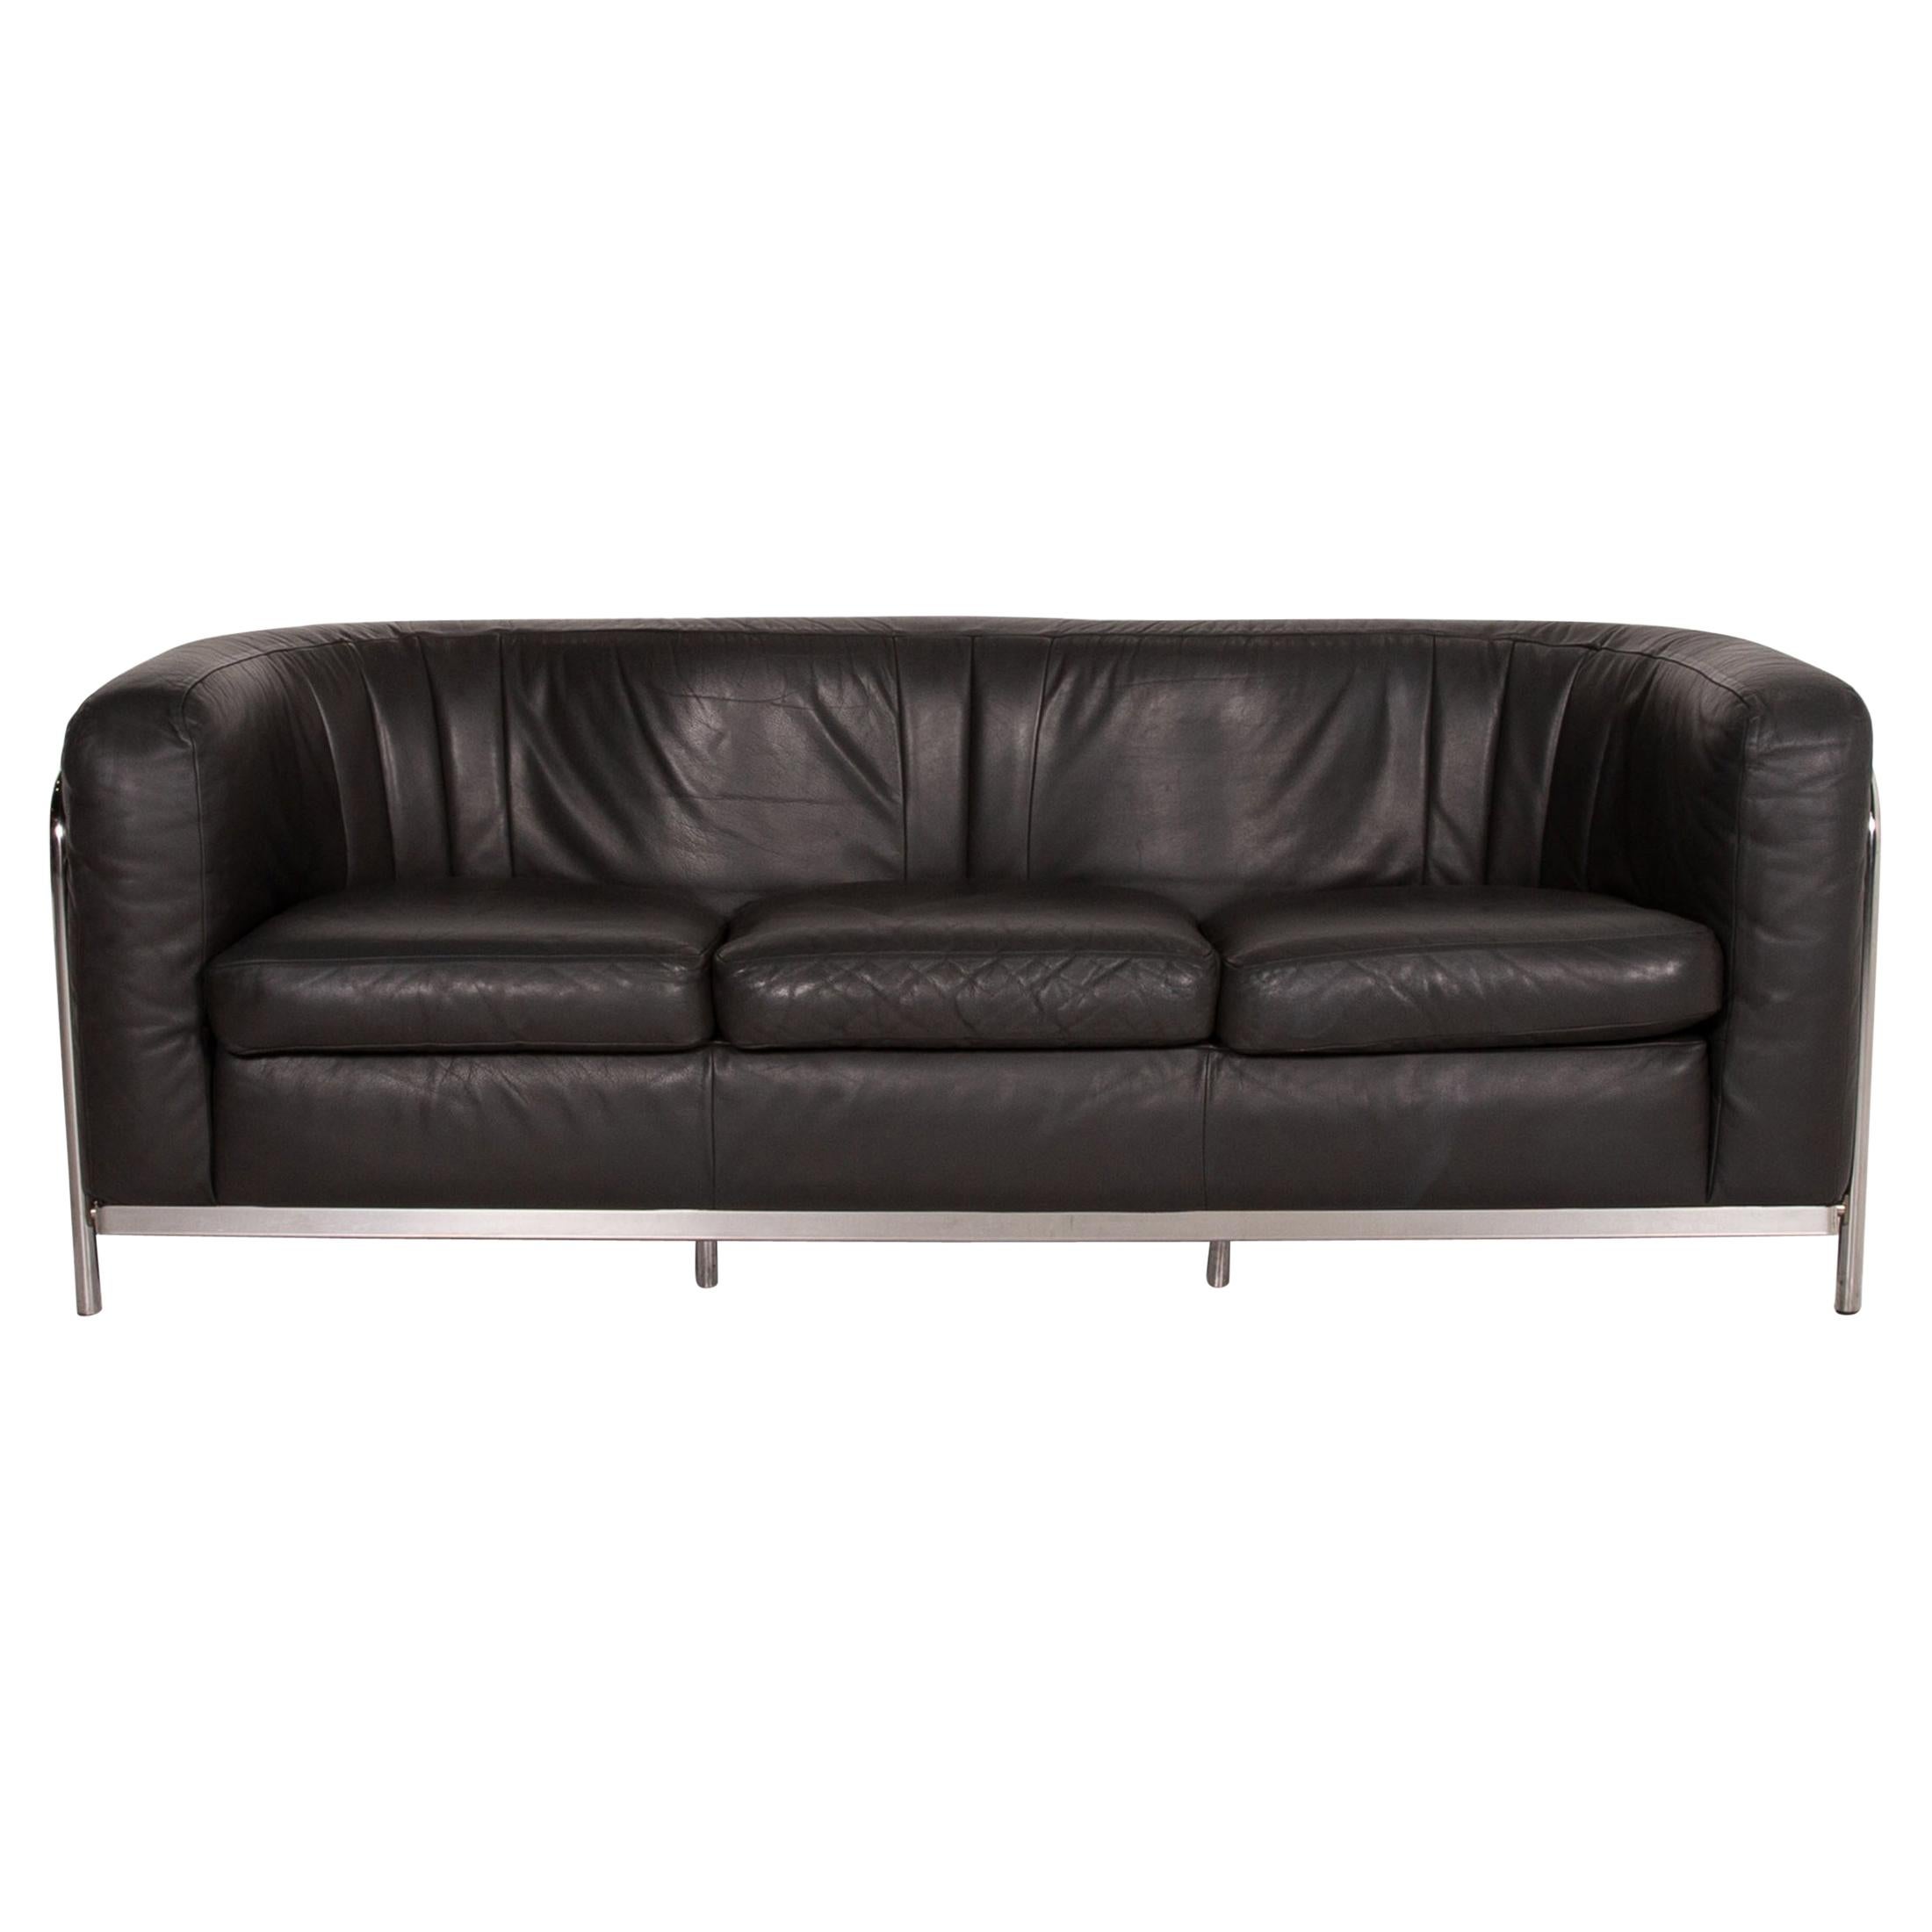 Zanotta Onda Leather Sofa Black Three-Seat Couch